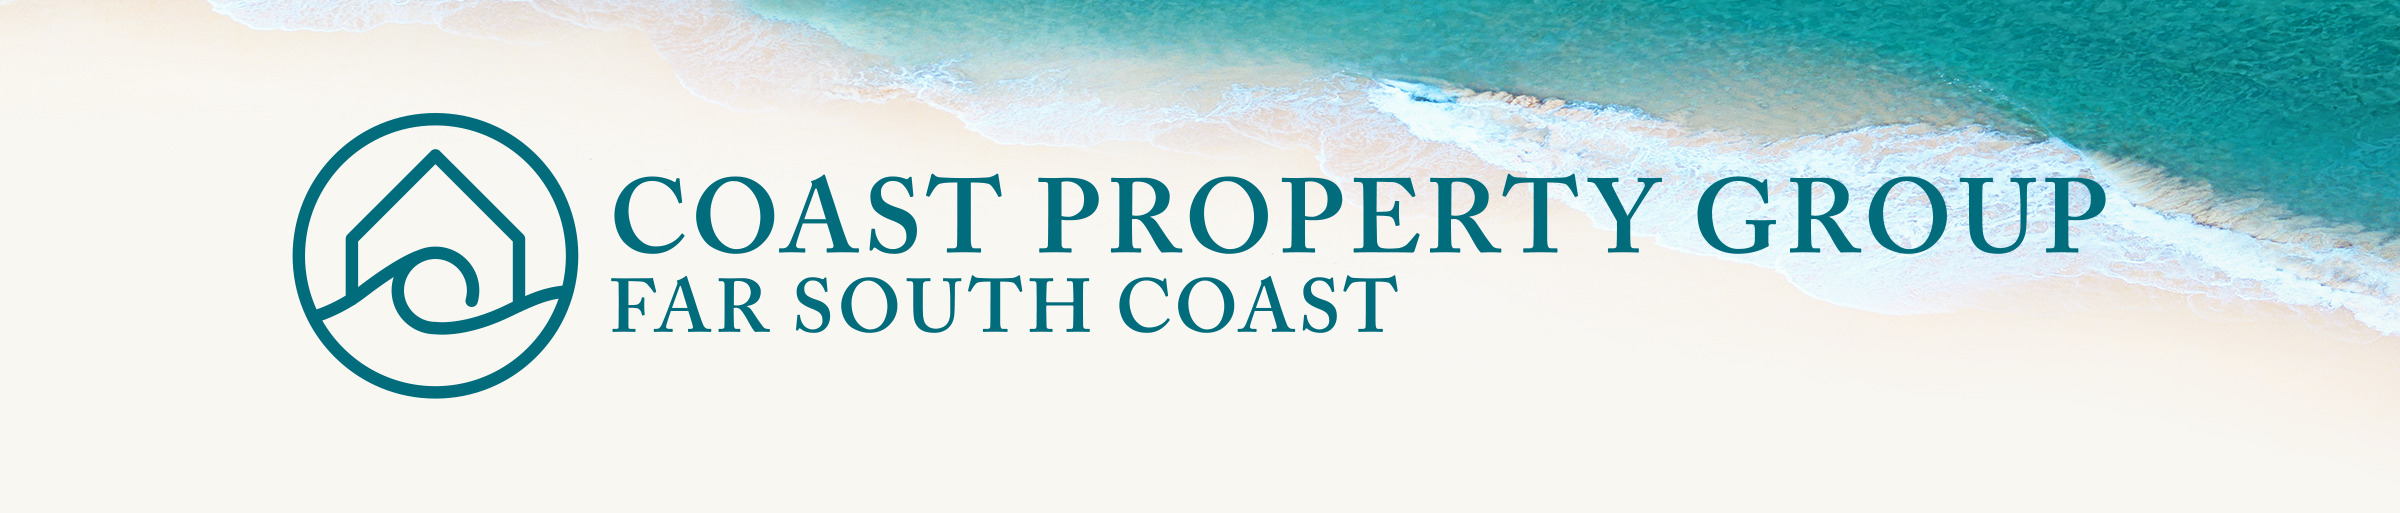 Coast Property Group Far South Coast